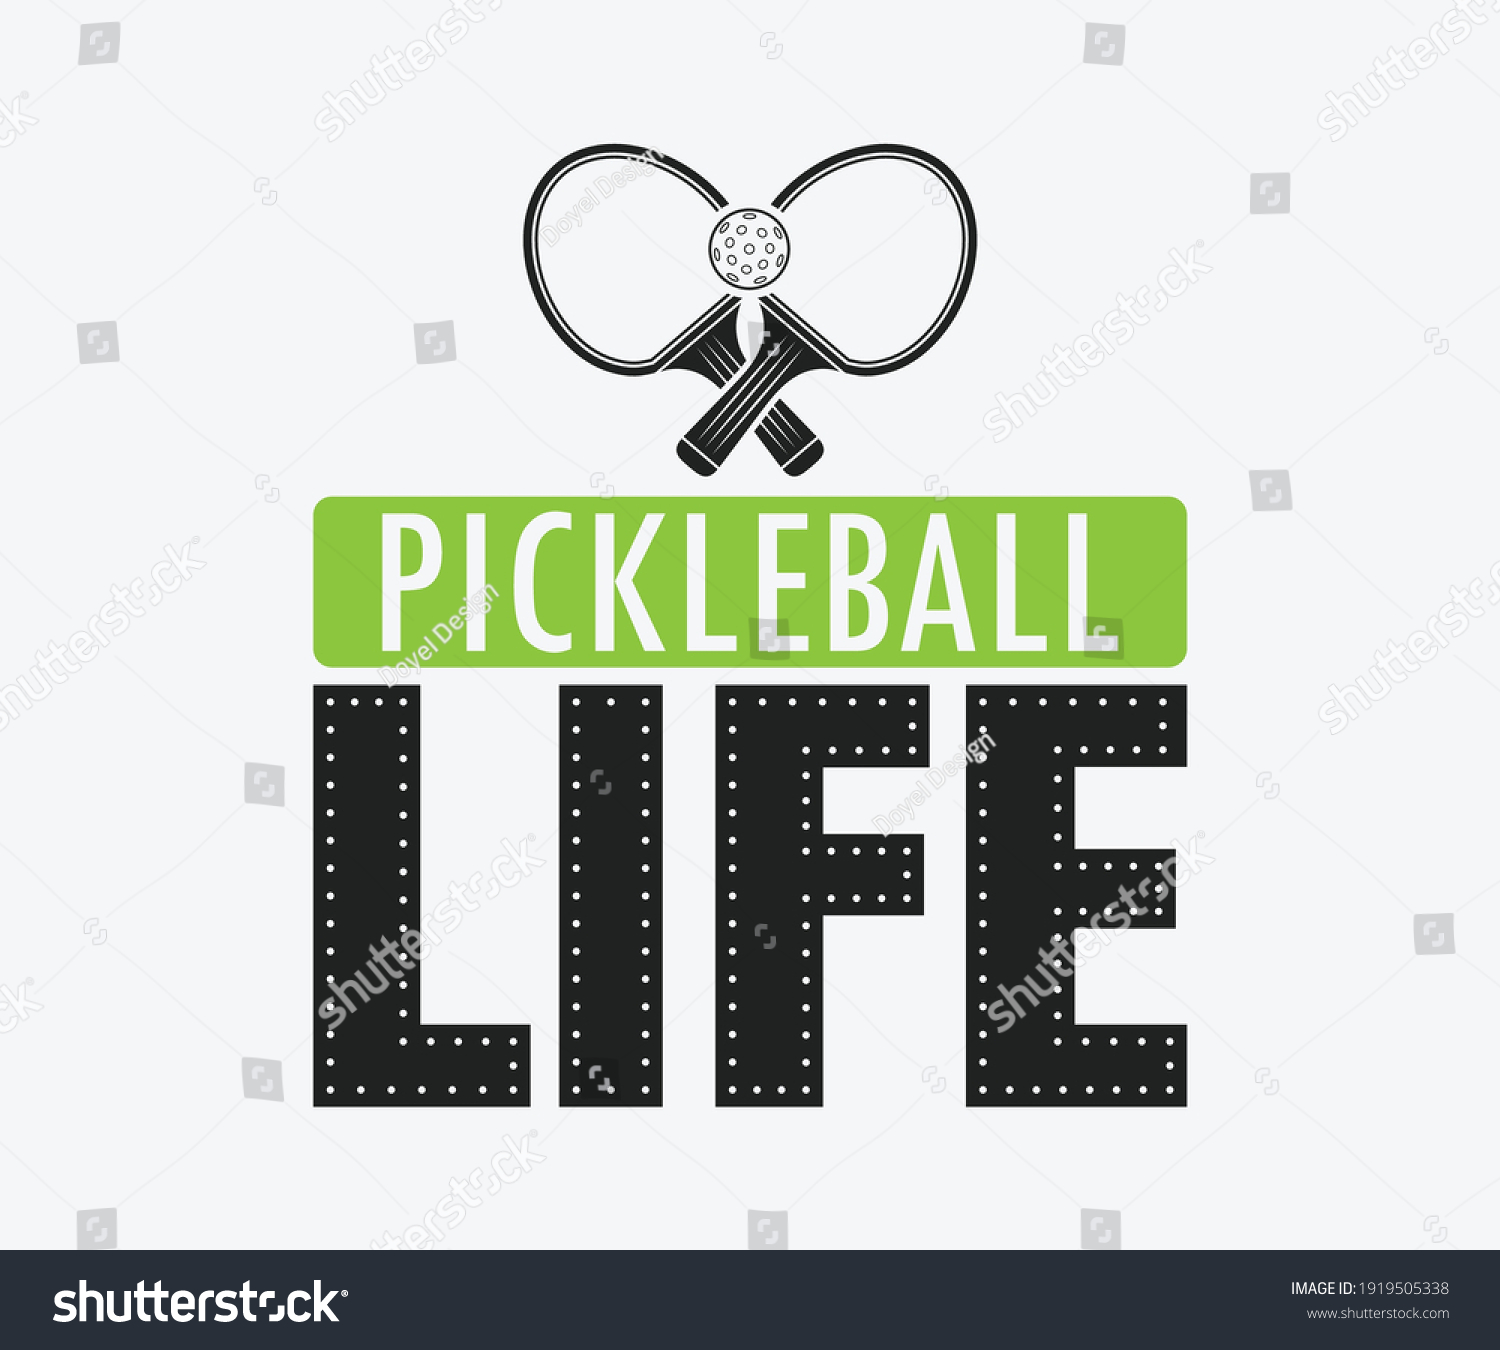 SVG of Pickleball Life, Printable Vector Illustration. Pickleball SVG. Great for badge t-shirt and postcard designs. Vector graphic illustration. svg